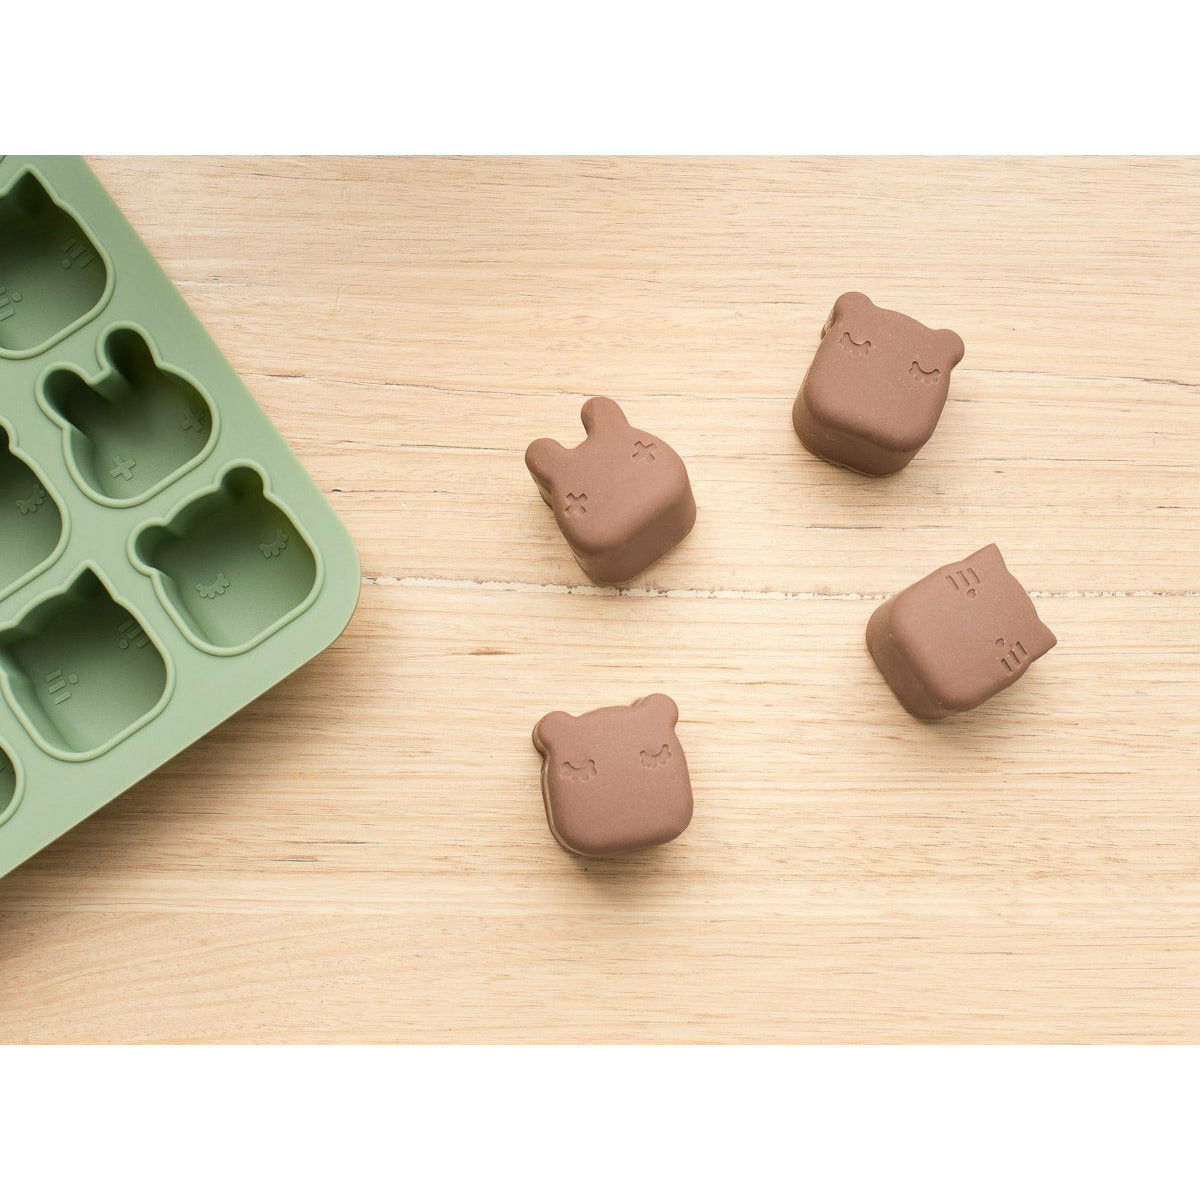 Chocolate Bar Silicone Mold- Kaleidoscope – Baking Treasures Bake Shop